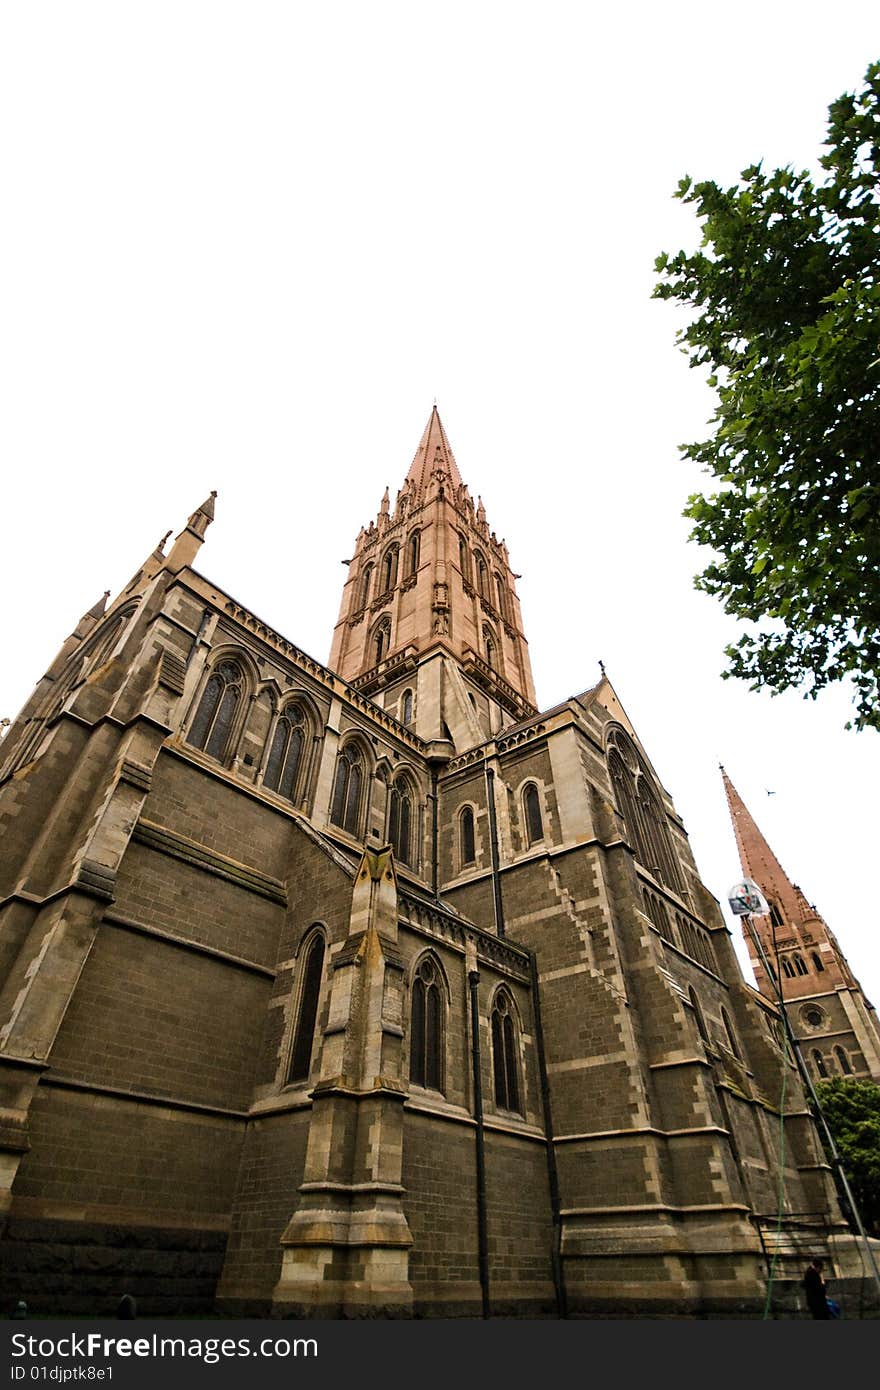 St. Patrick’s Cathedral, Melbourne，Australia. St. Patrick’s Cathedral, Melbourne，Australia